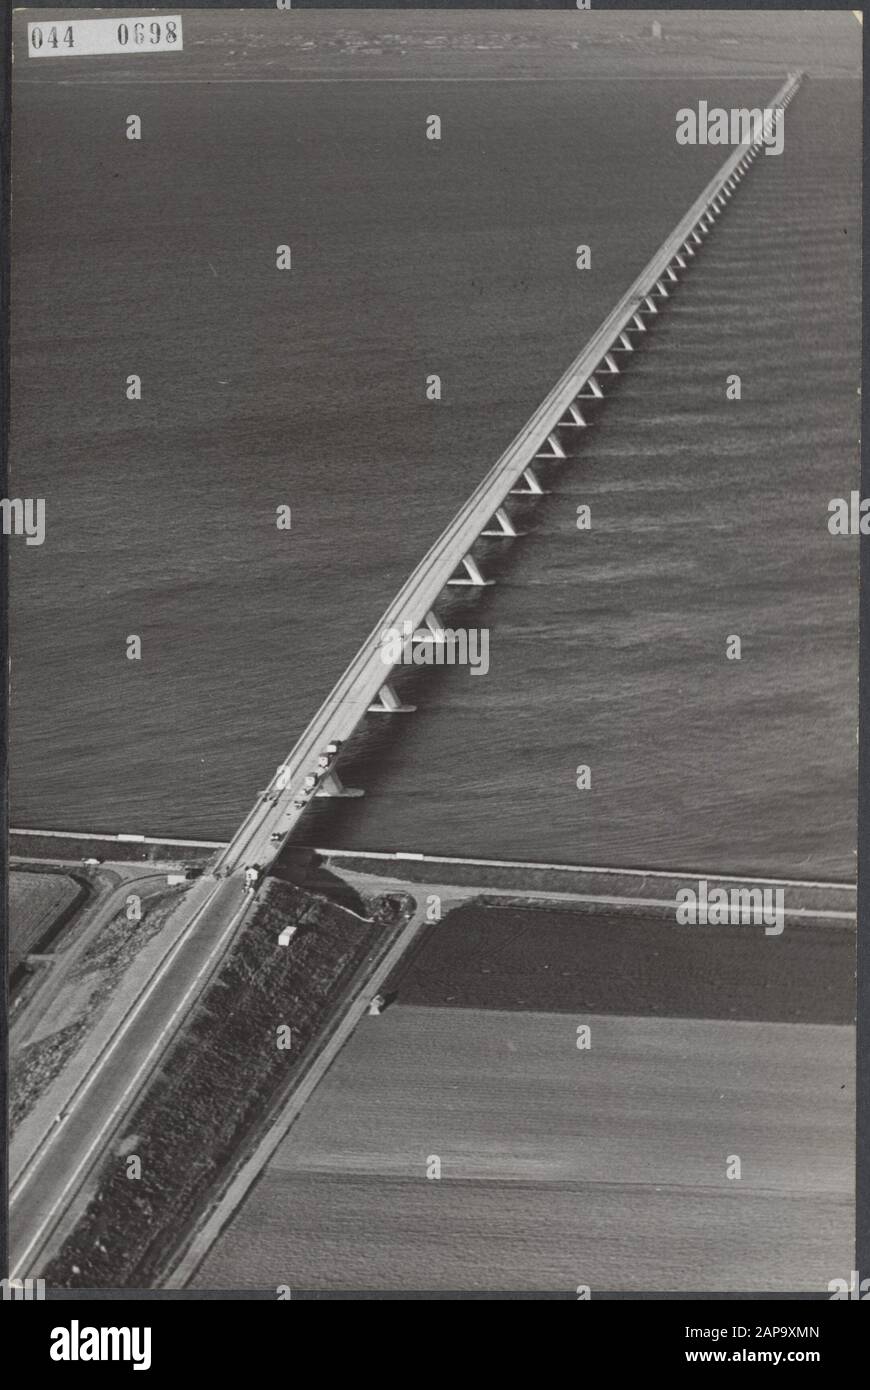 Ponti, laghi Data: 15 novembre 1965 luogo: Zelanda Parole Chiave: Ponti, laghi Nome dell'istituzione: Deltawerken, Zeelandbrug Foto Stock